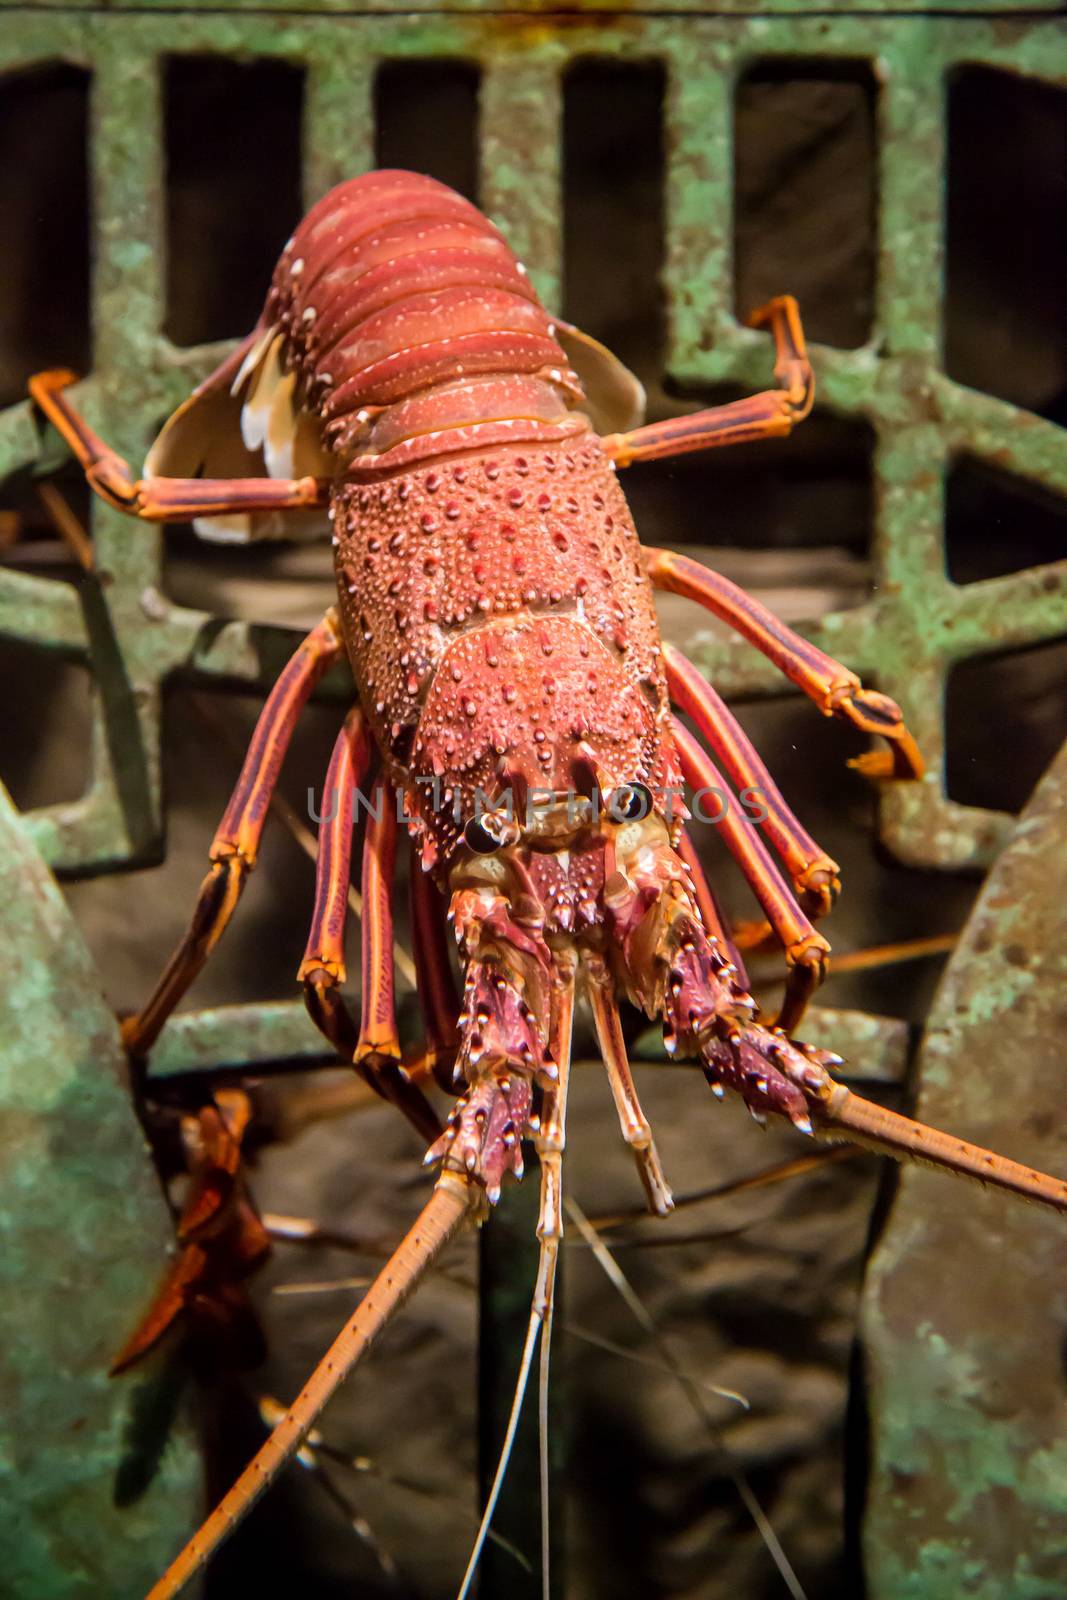 alive lobster in an aquarium by bloodua